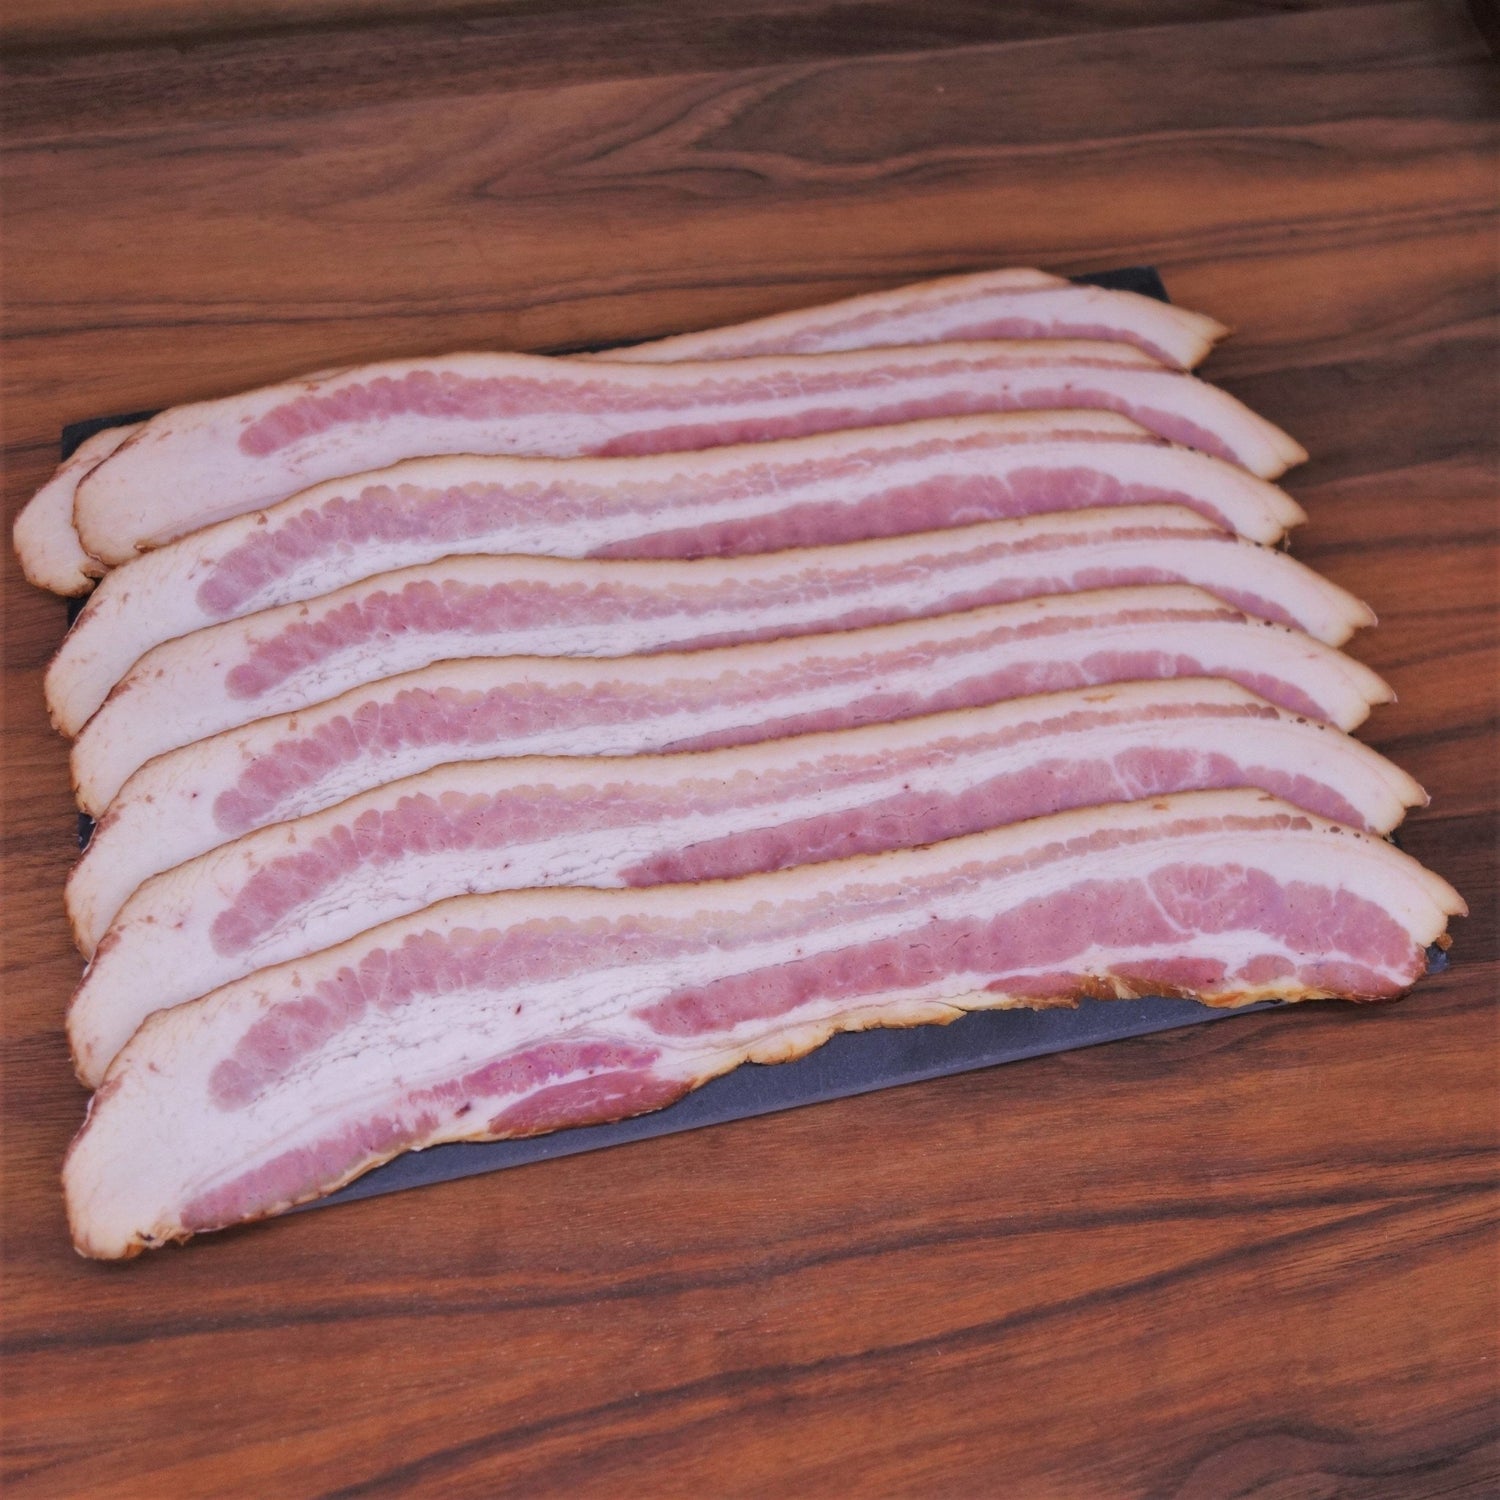 Nueske Slab Bacon Applewood - 1 lb - Mongers' Provisions